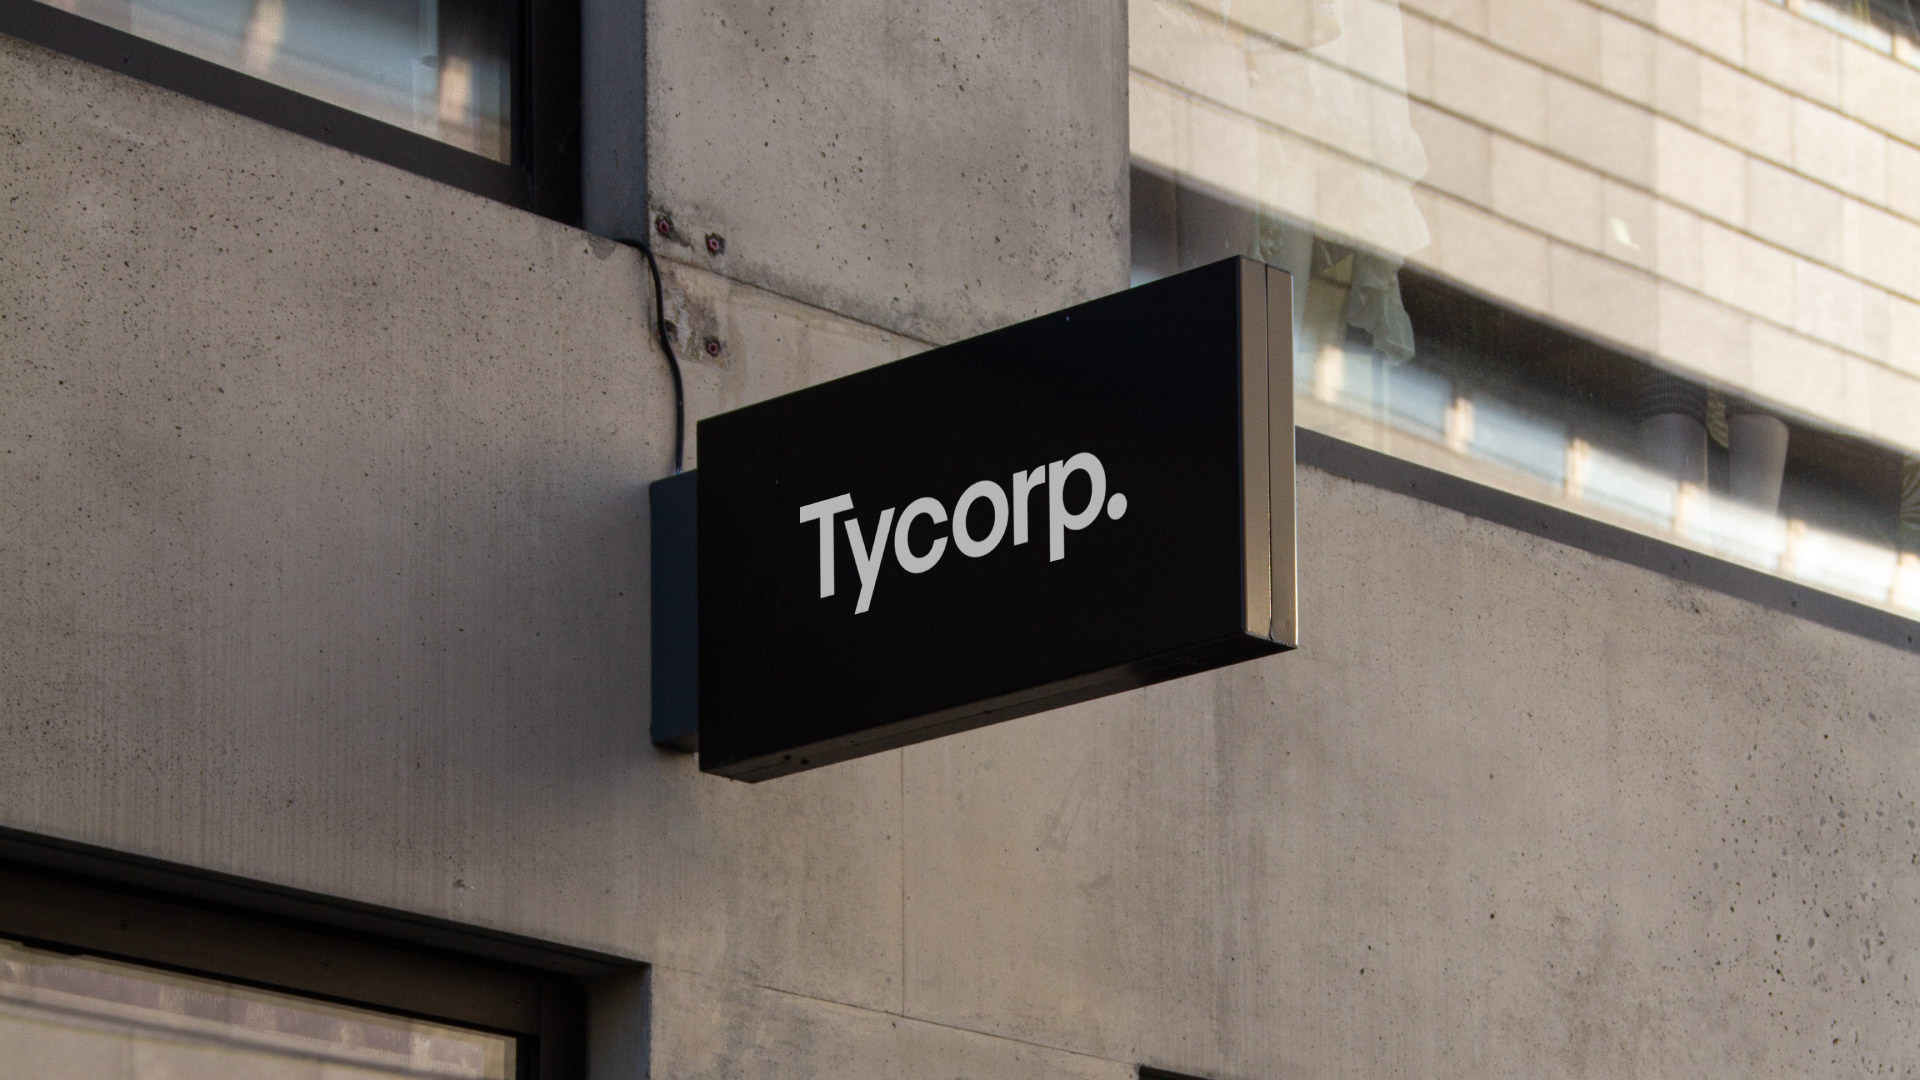 Tycorp